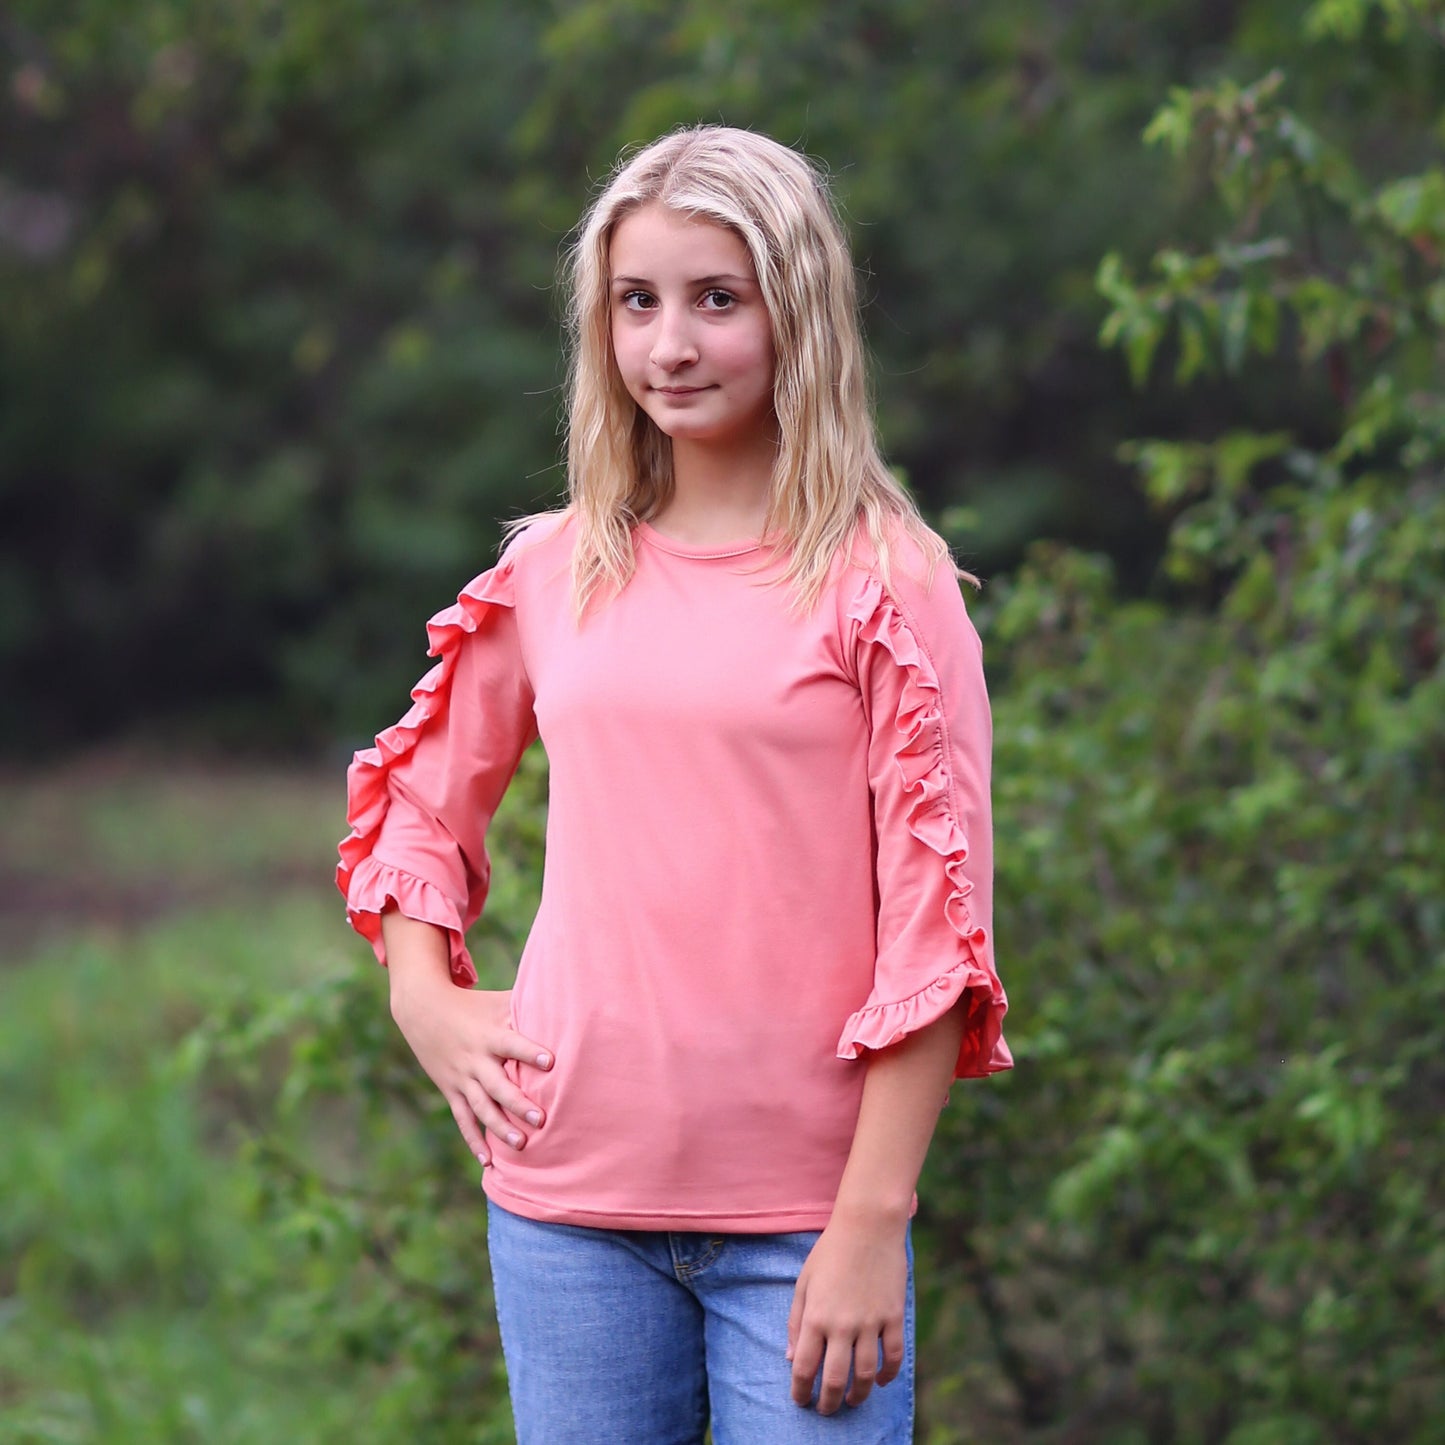 Girls Coral Ruffled Sleeve Shirt - coral shirt, pink shirt, ruffled shirt, girls shirt, school shirt, gift for her, 3/4 sleeve ruffled shirt